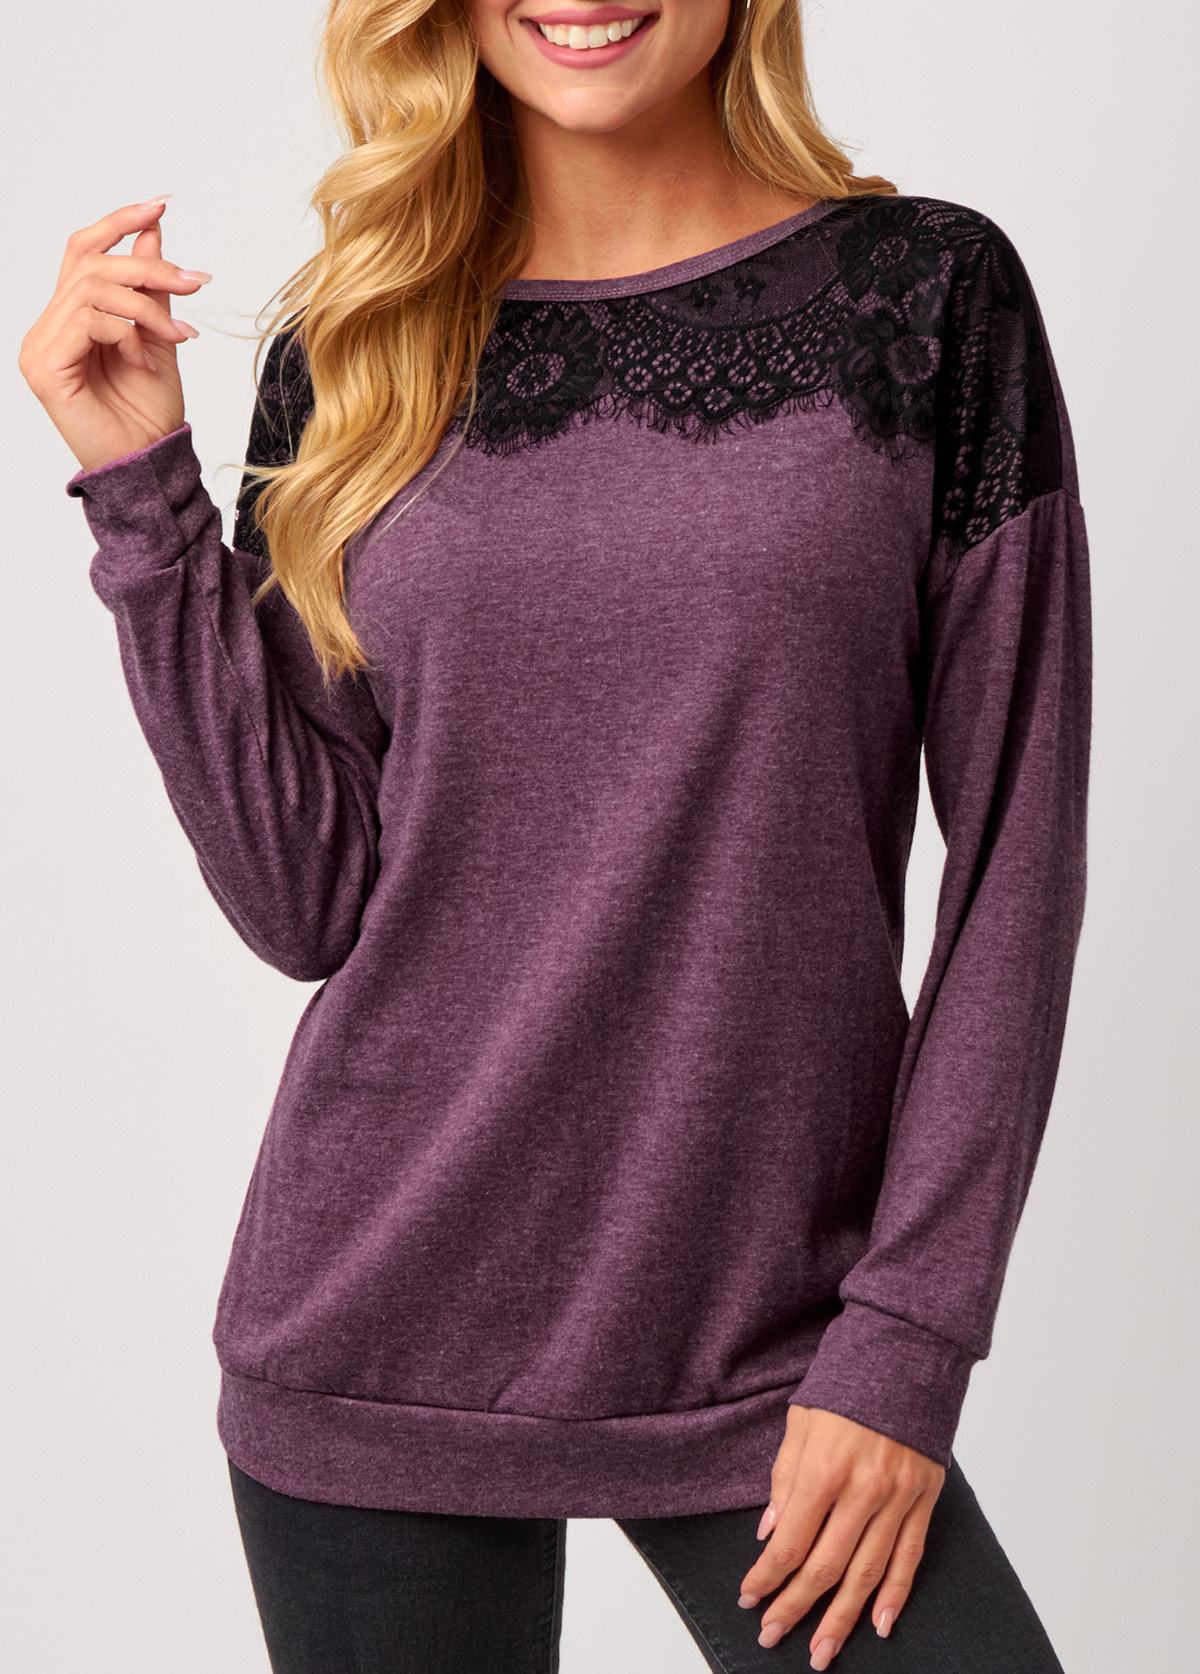 Lace Panel Purple Long Sleeve T Shirt